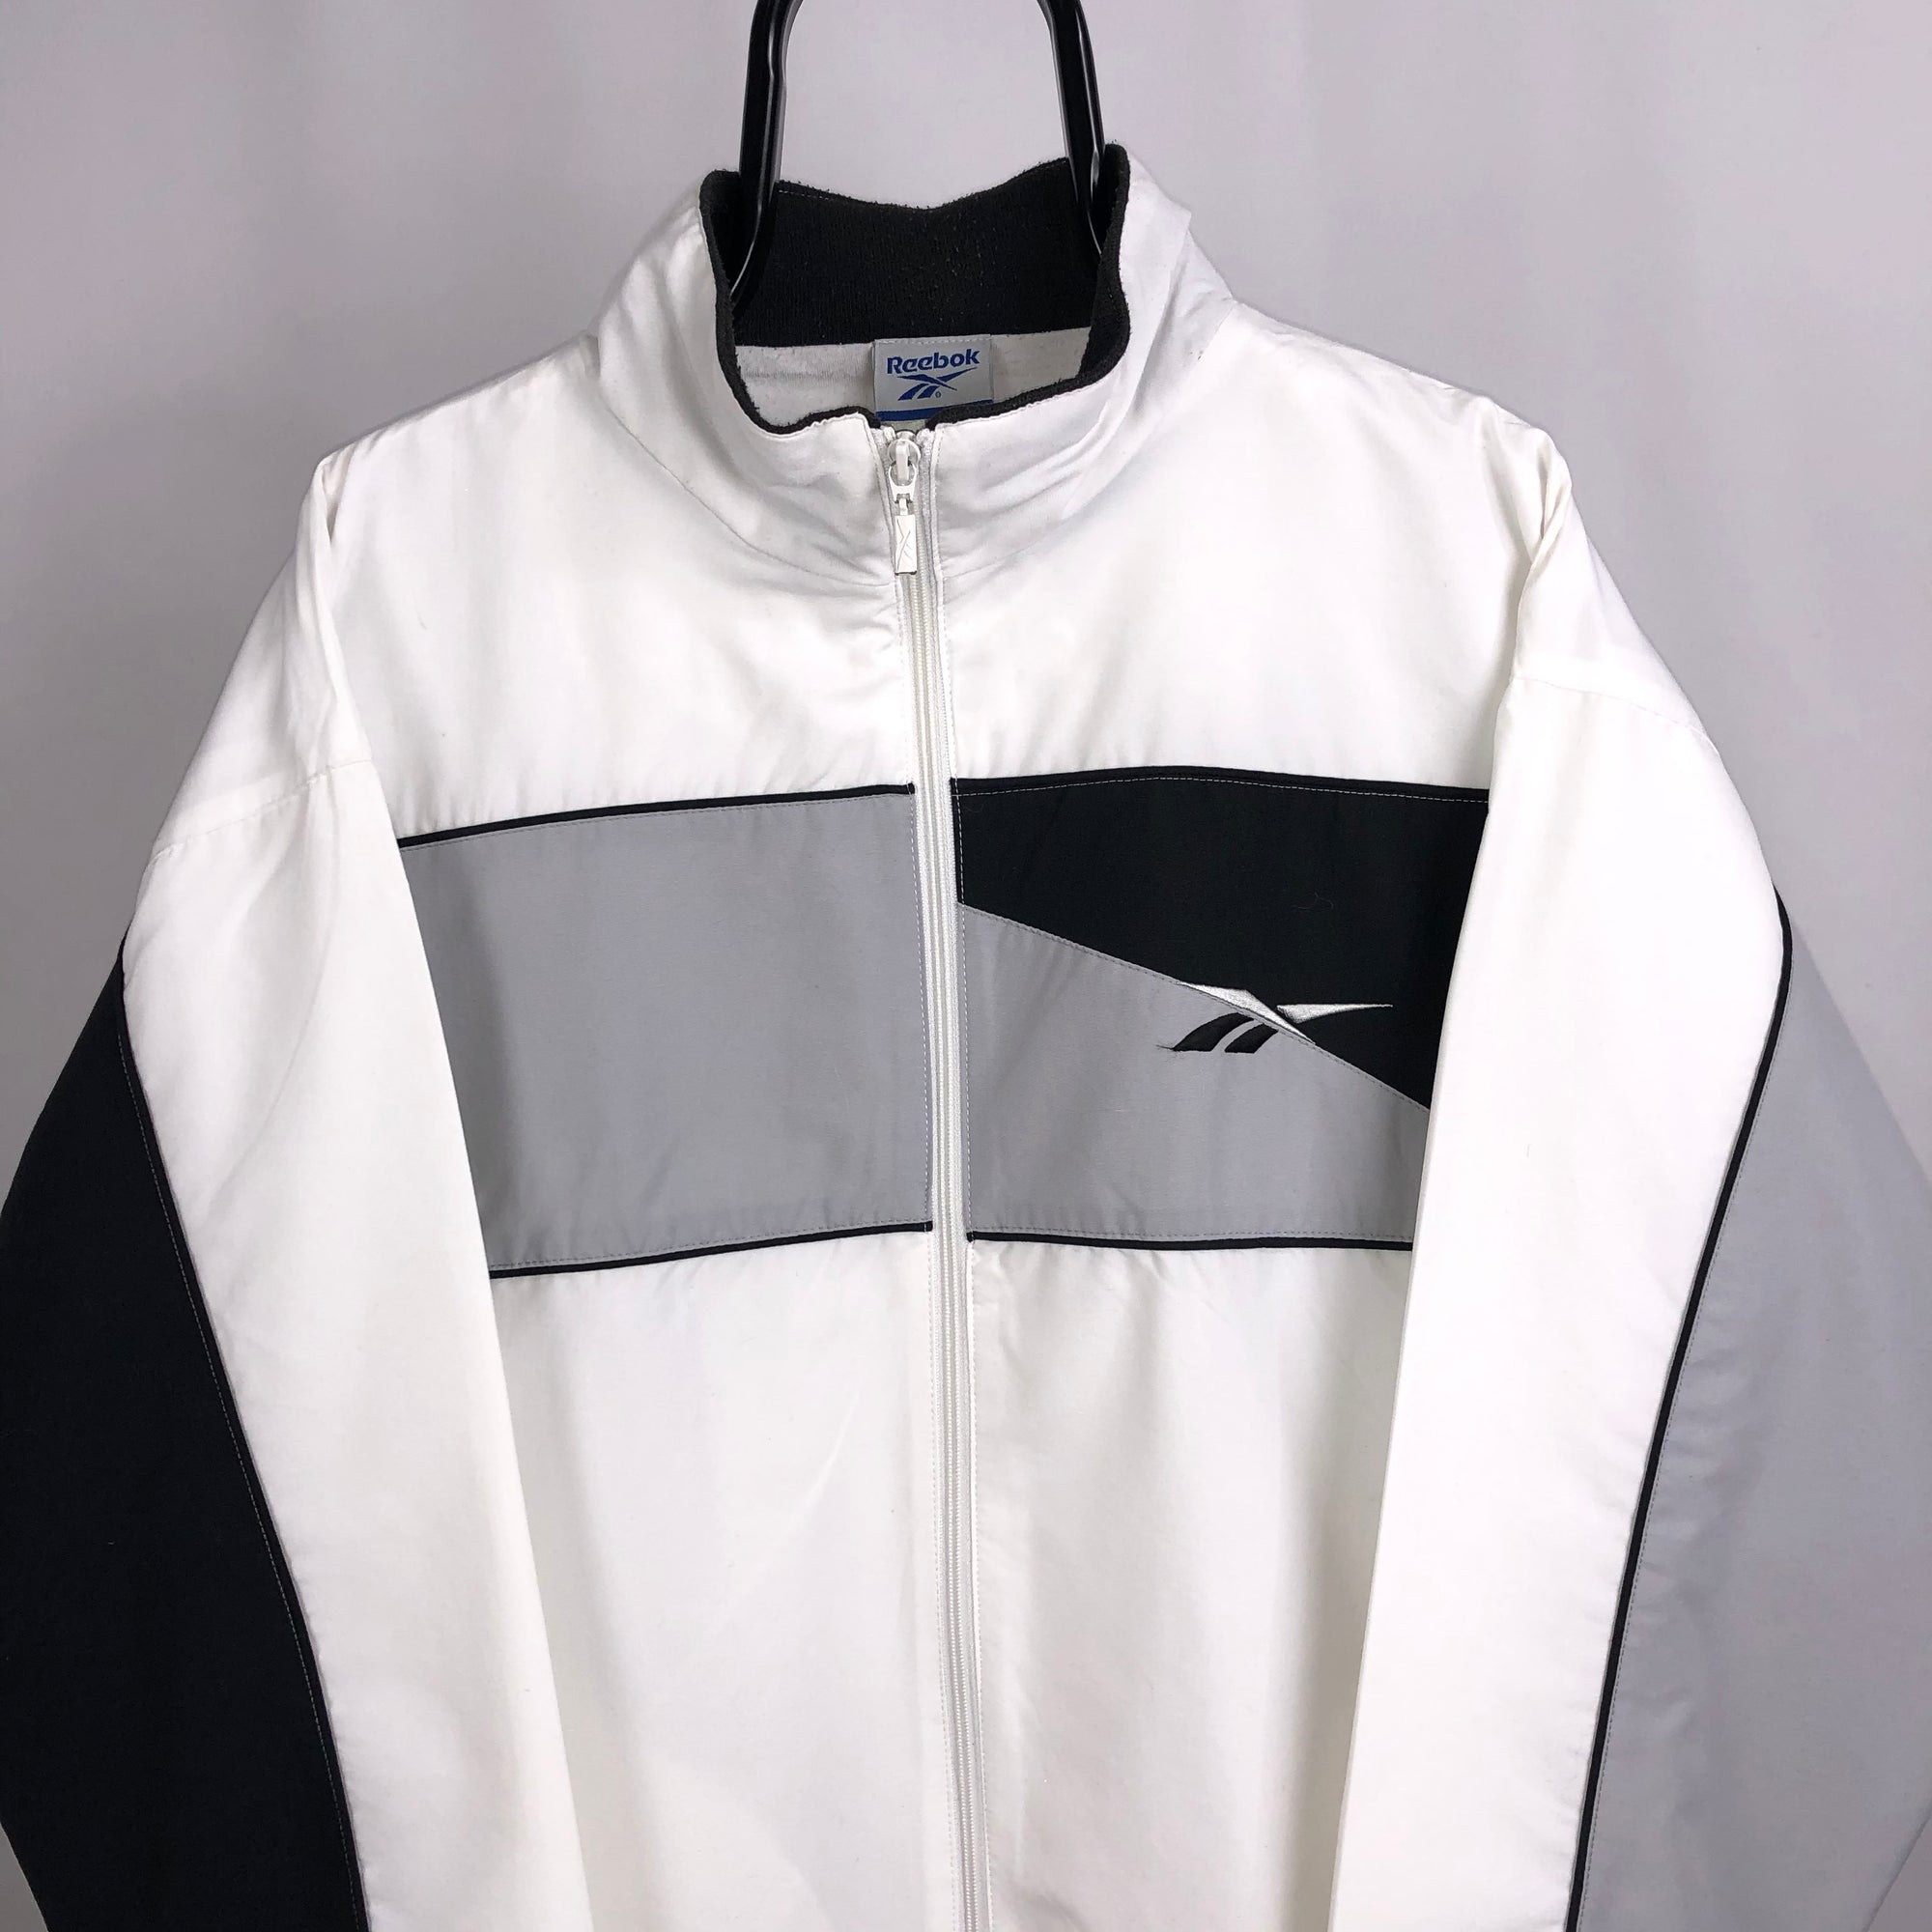 Vintage Reebok Track Jacket in White/Black/Grey - Men's Large/Women's XL